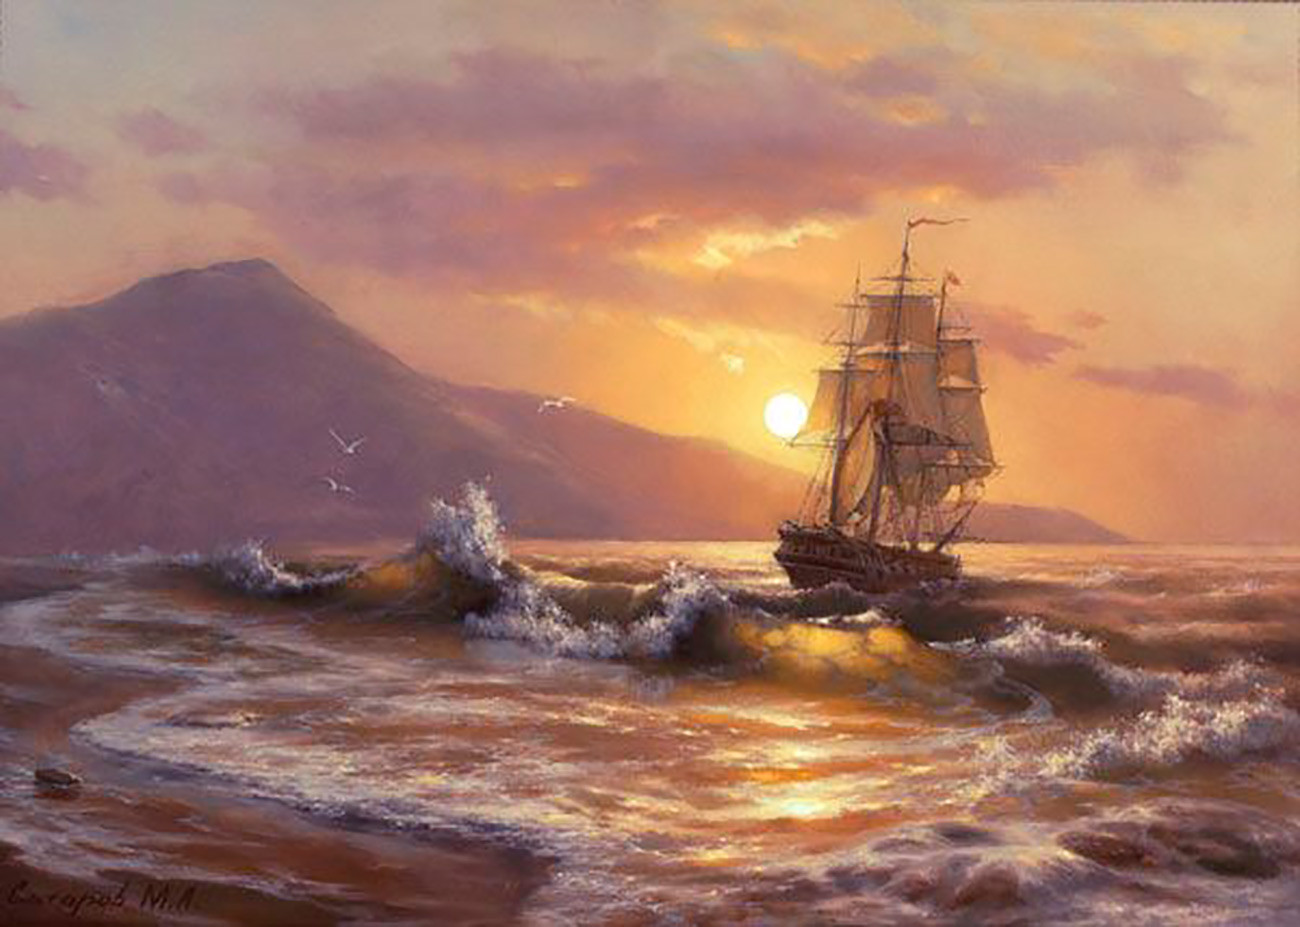 Mikhail Satarov, The Golden Sails (2009)